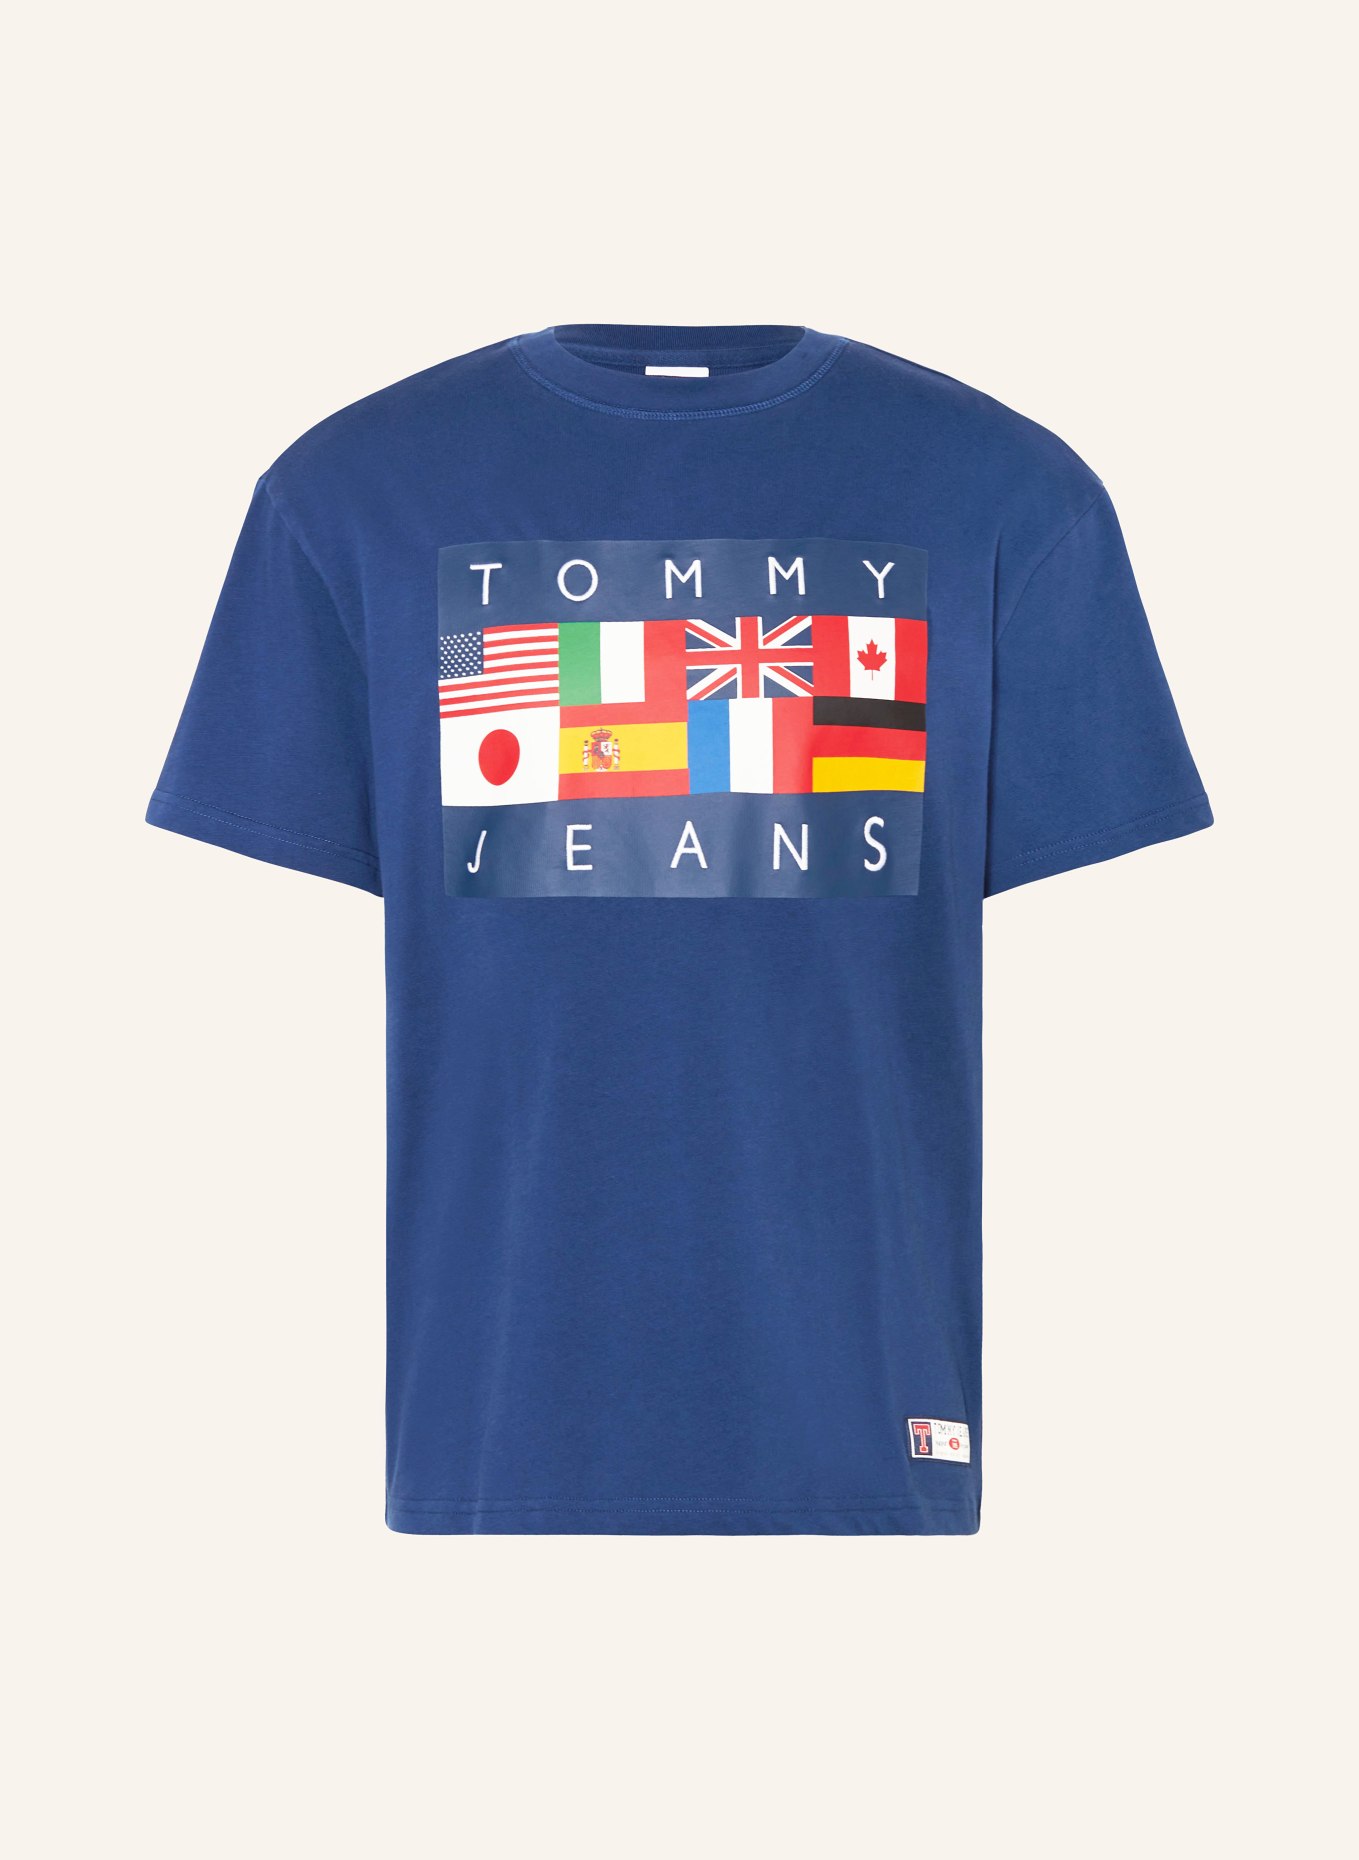 TOMMY JEANS T-Shirt, Farbe: DUNKELBLAU/ WEISS/ ROT (Bild 1)